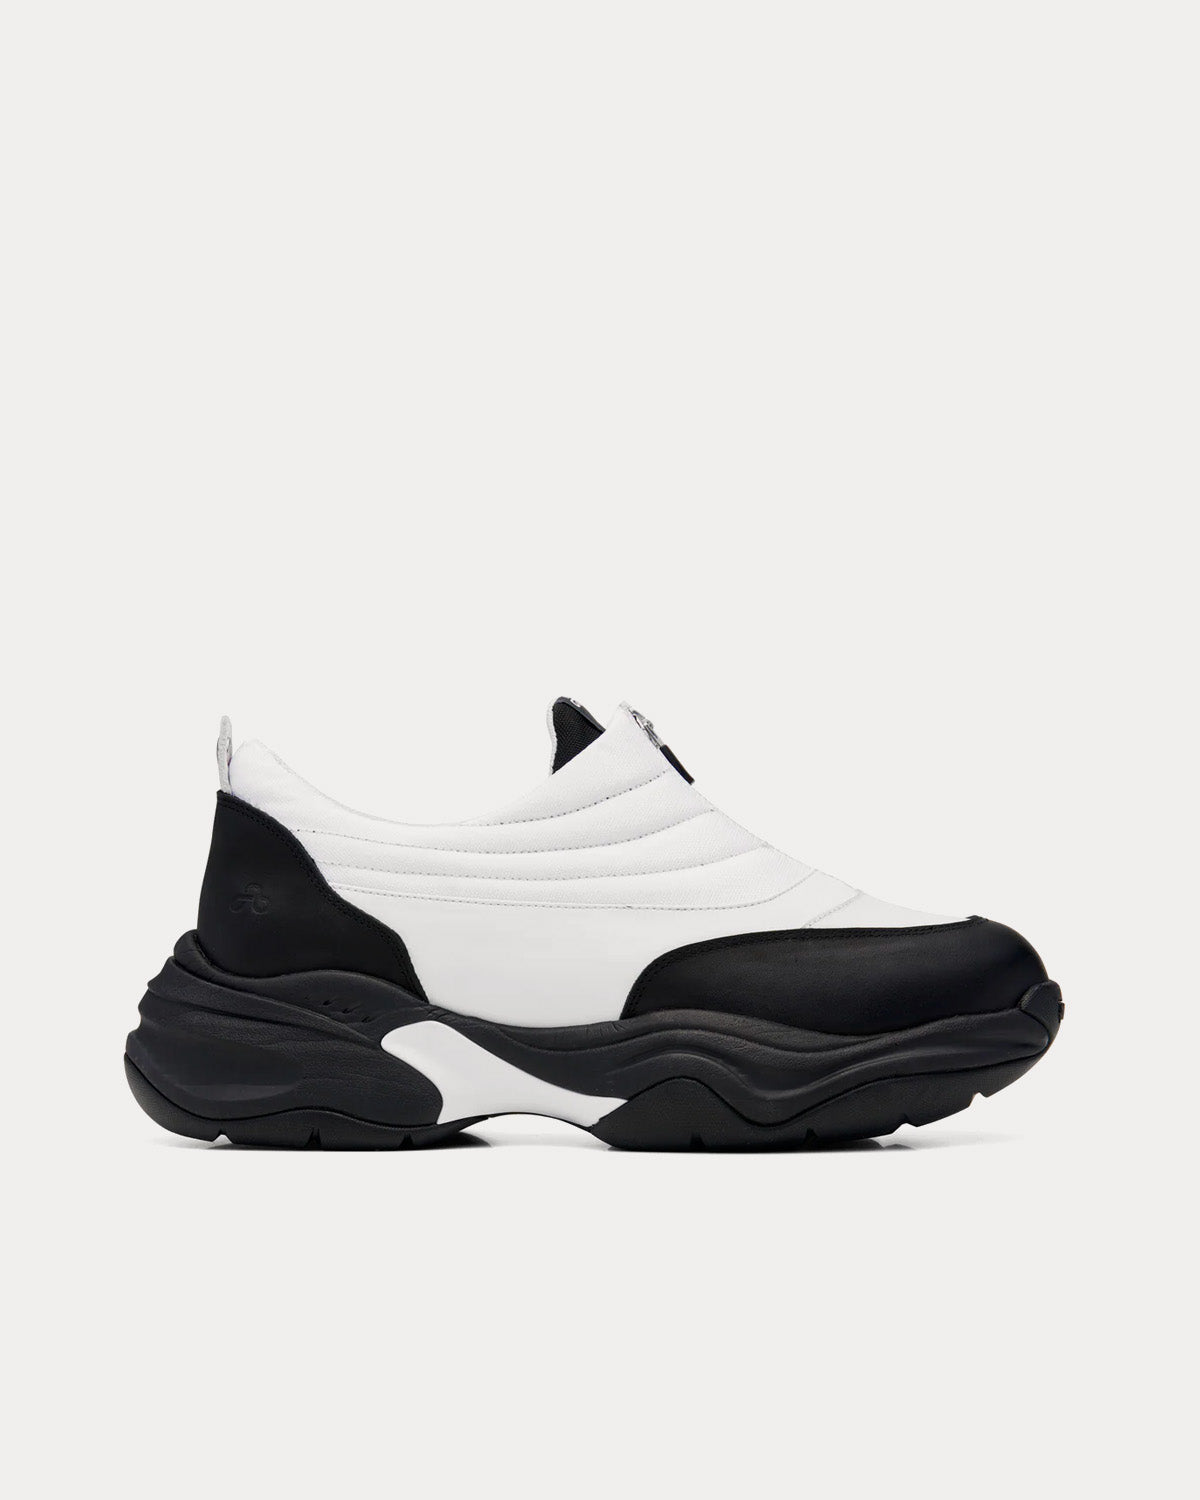 OAO - Fountain White / Black Slip On Sneakers